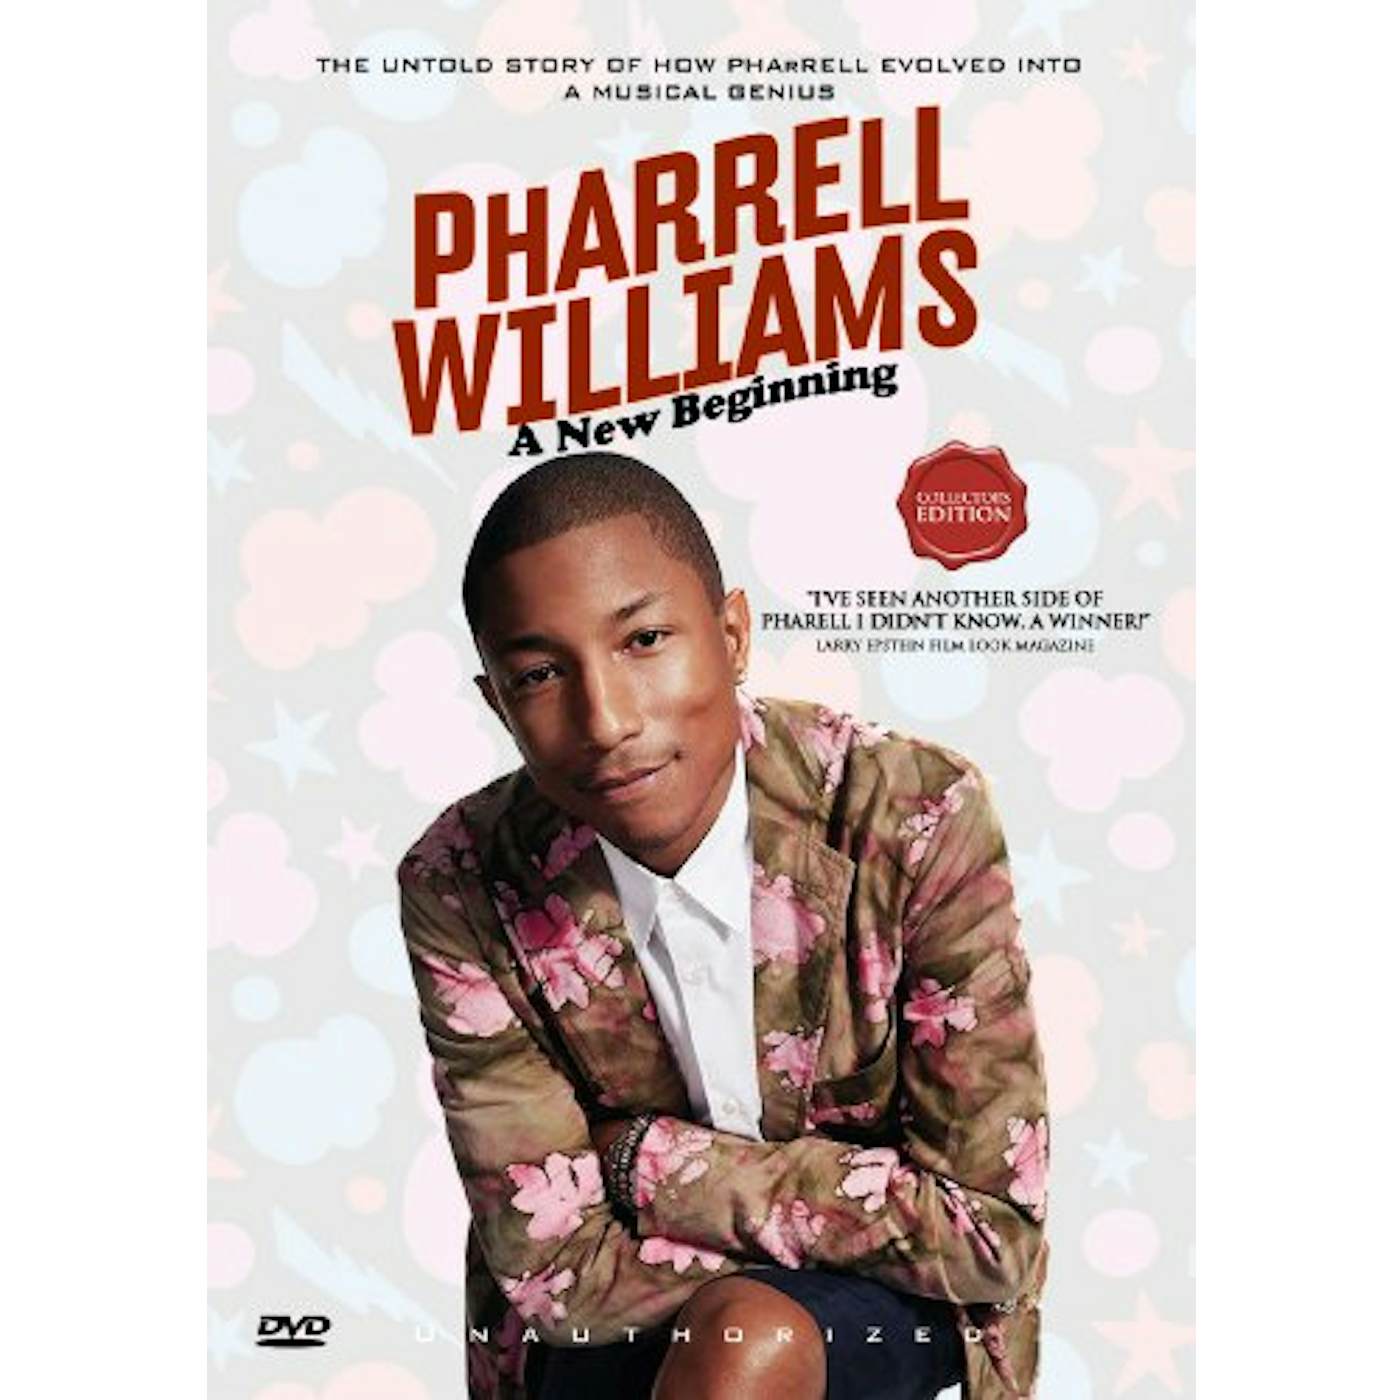 Pharrell Williams NEW BEGINNING DVD